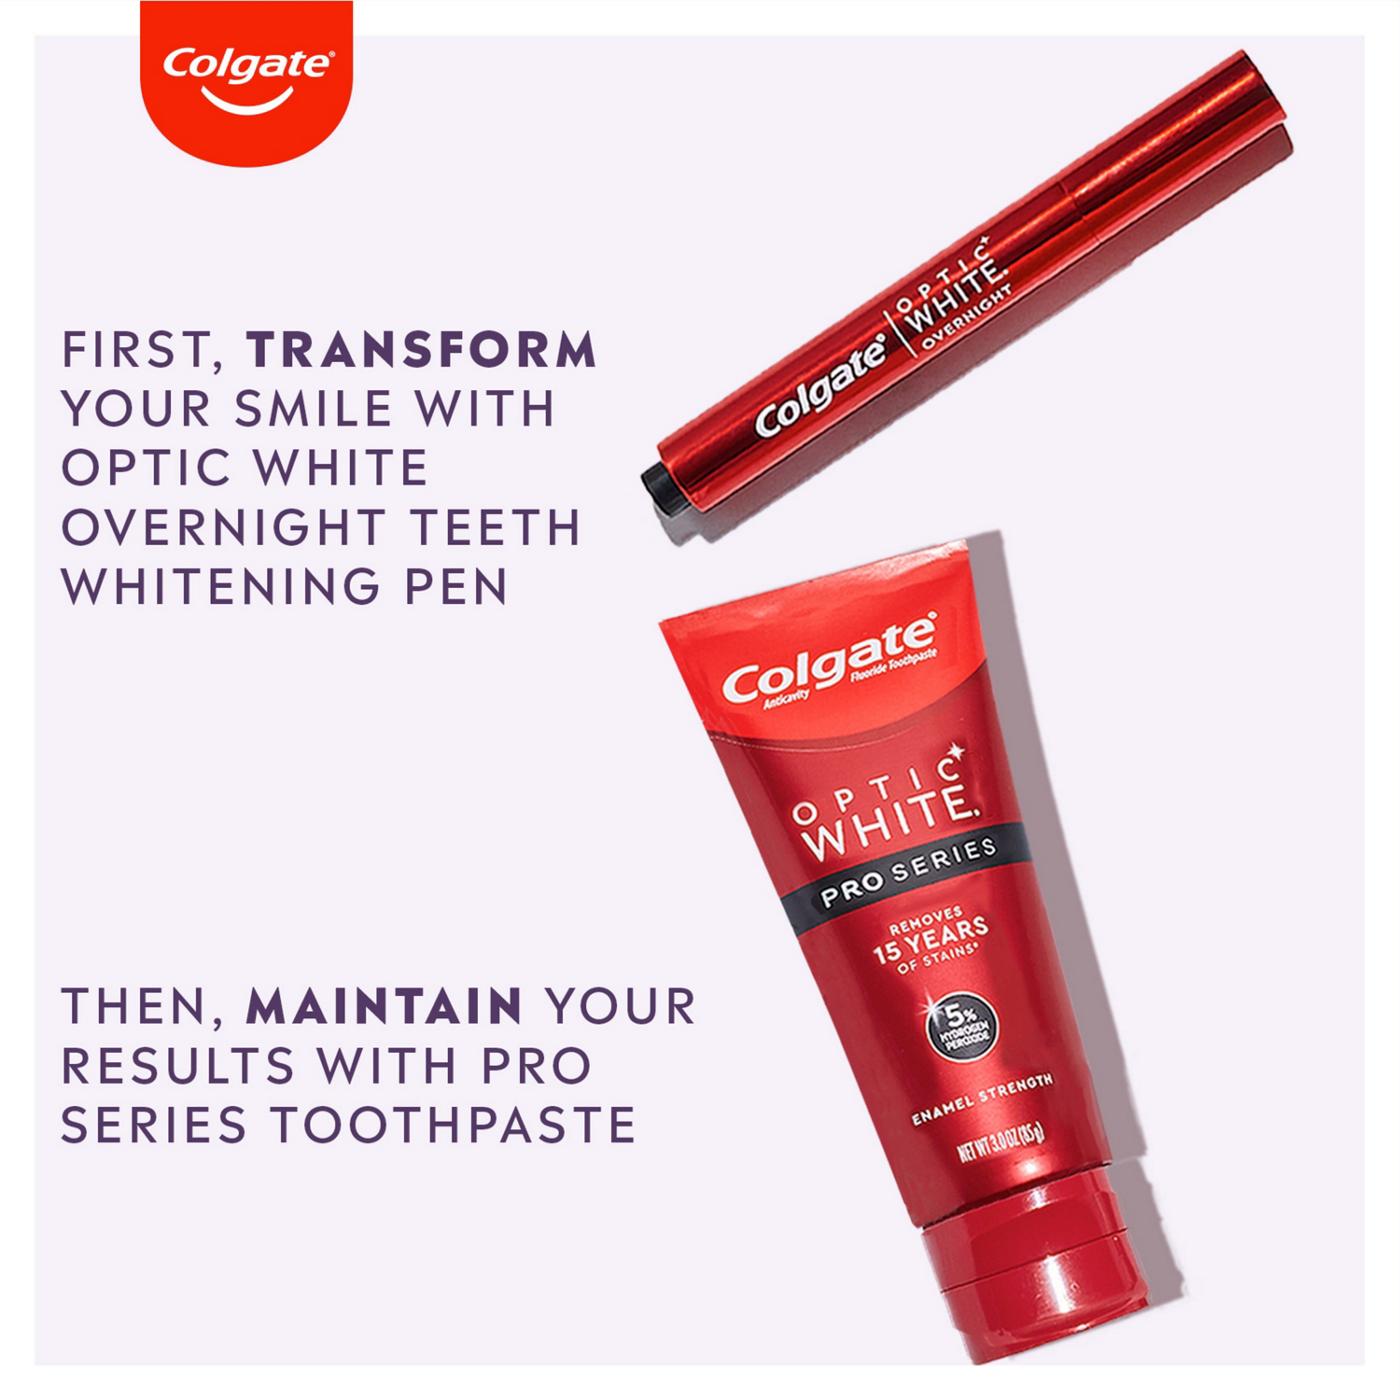 Colgate Optic White Overnight Teeth Whitening Pen; image 10 of 10